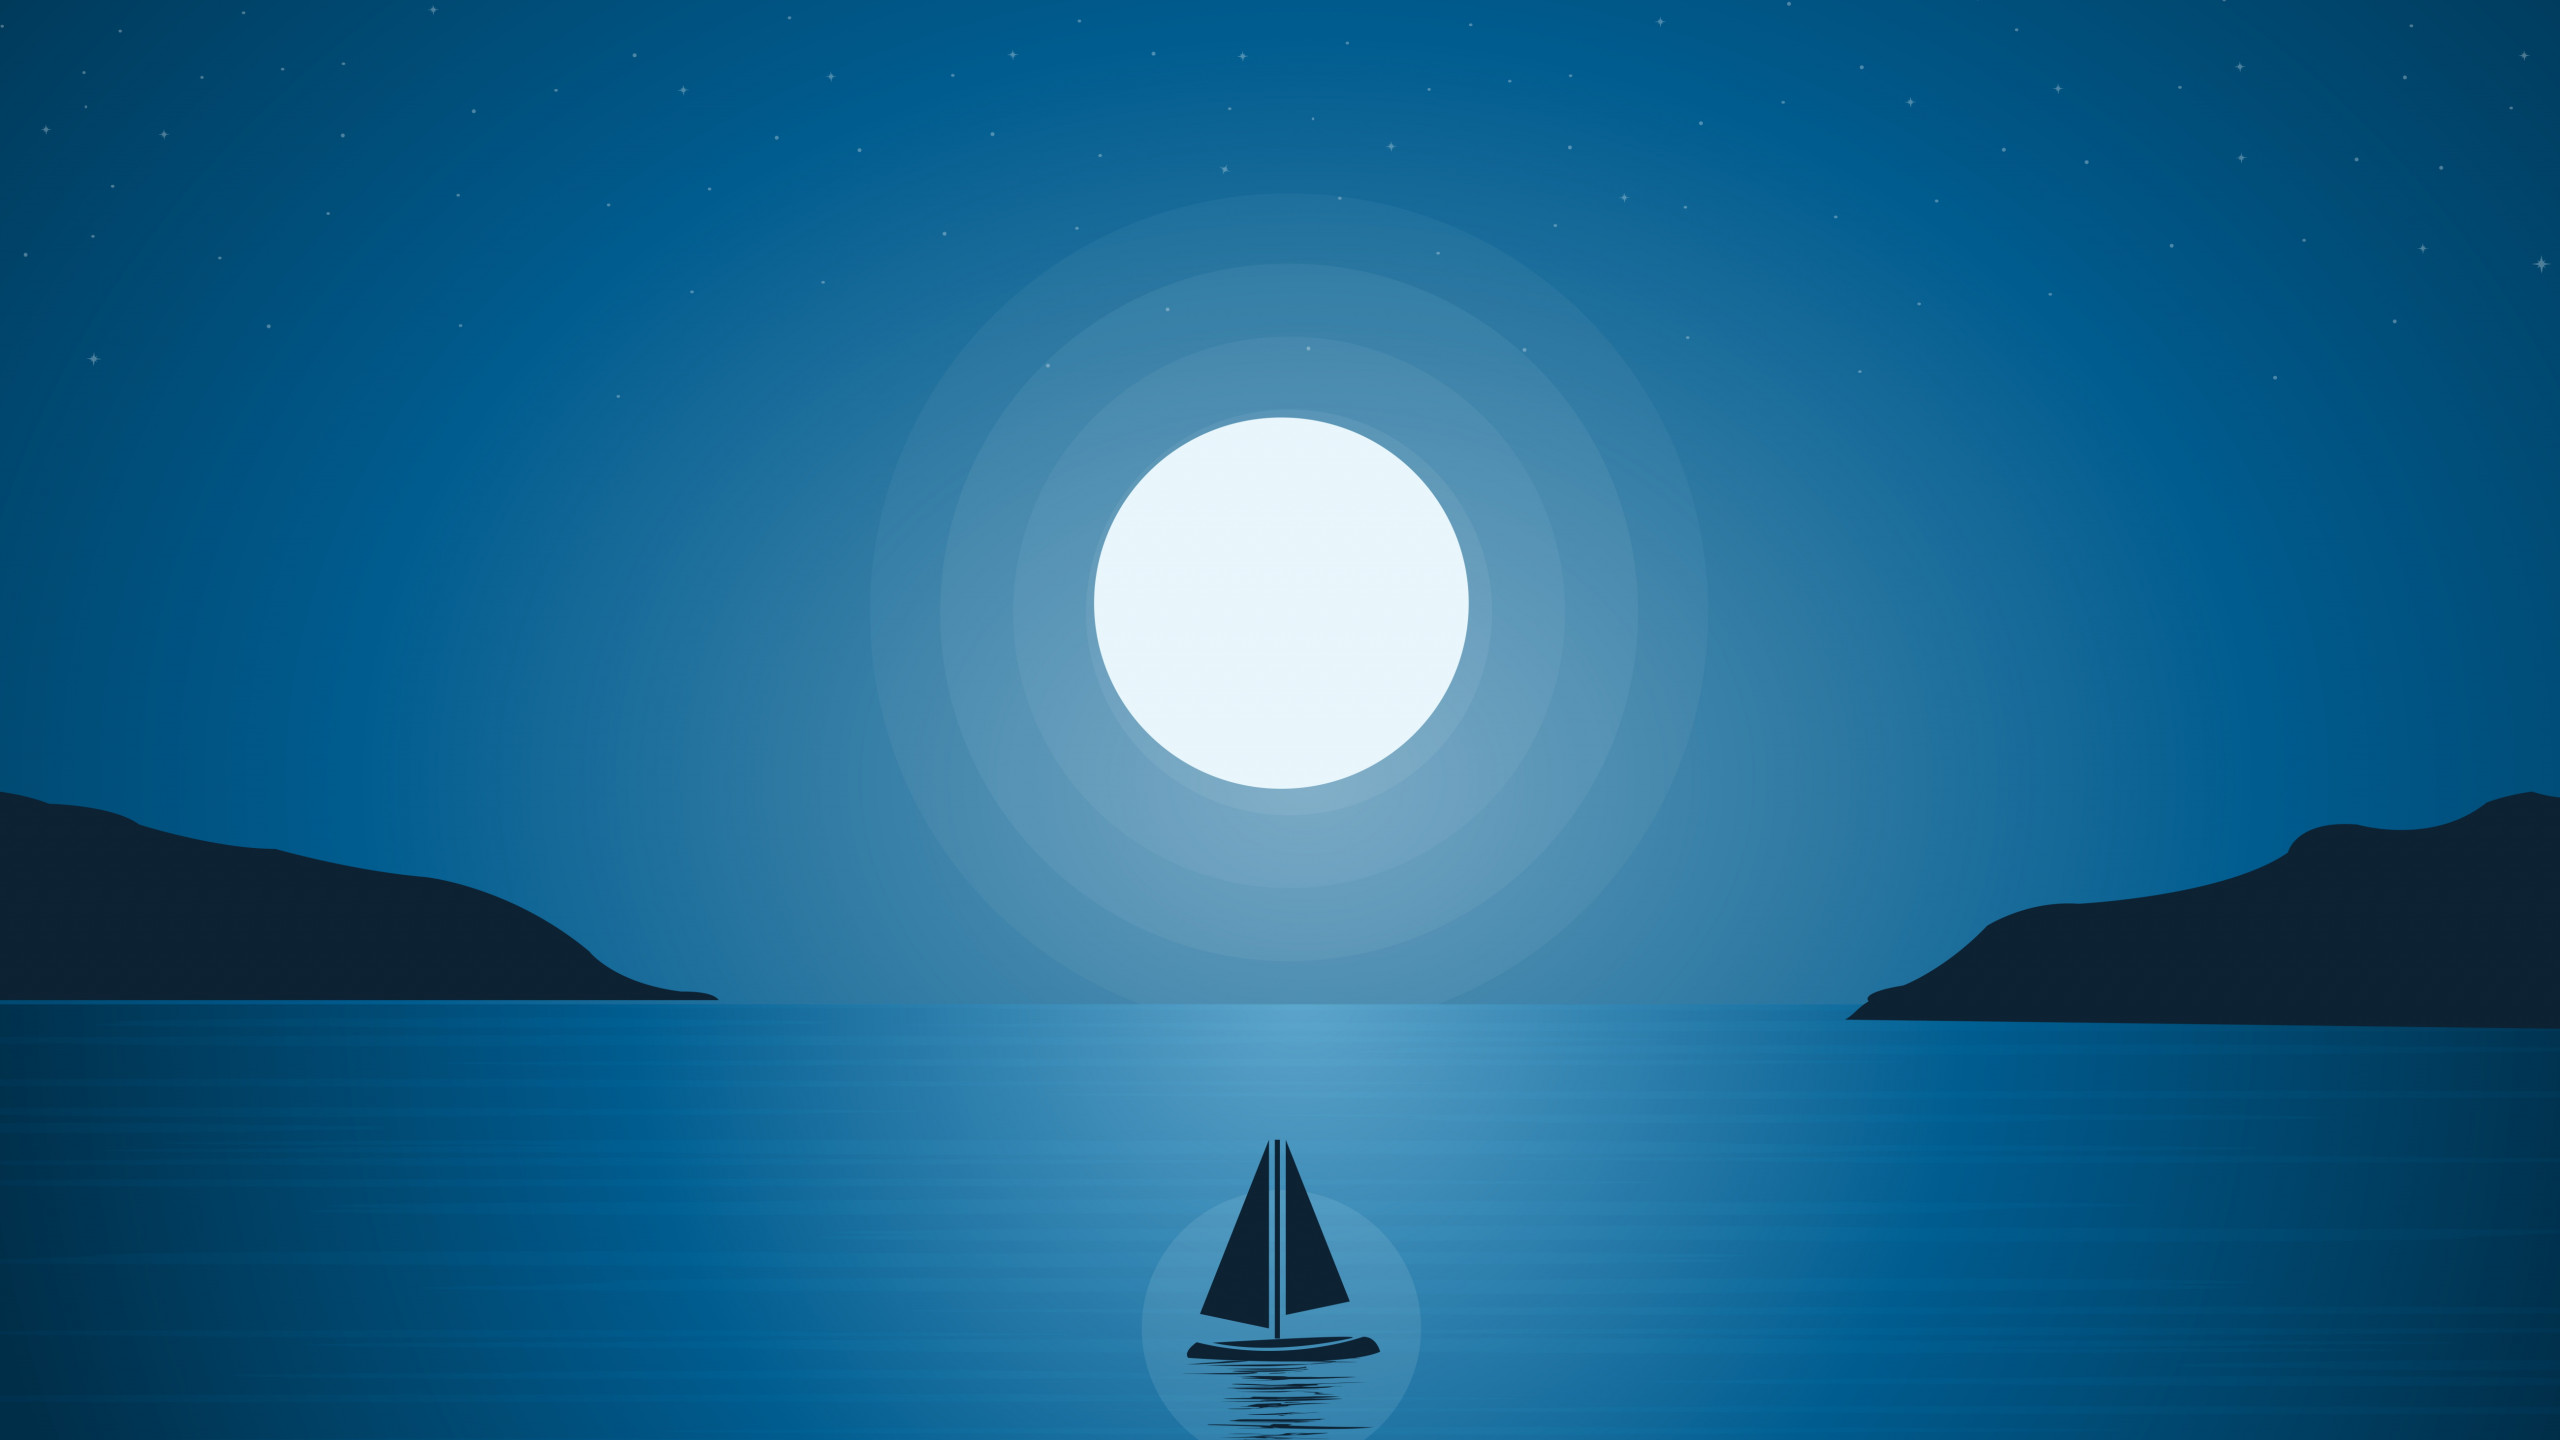 Boat trip under the moonlight wallpaper 2560x1440